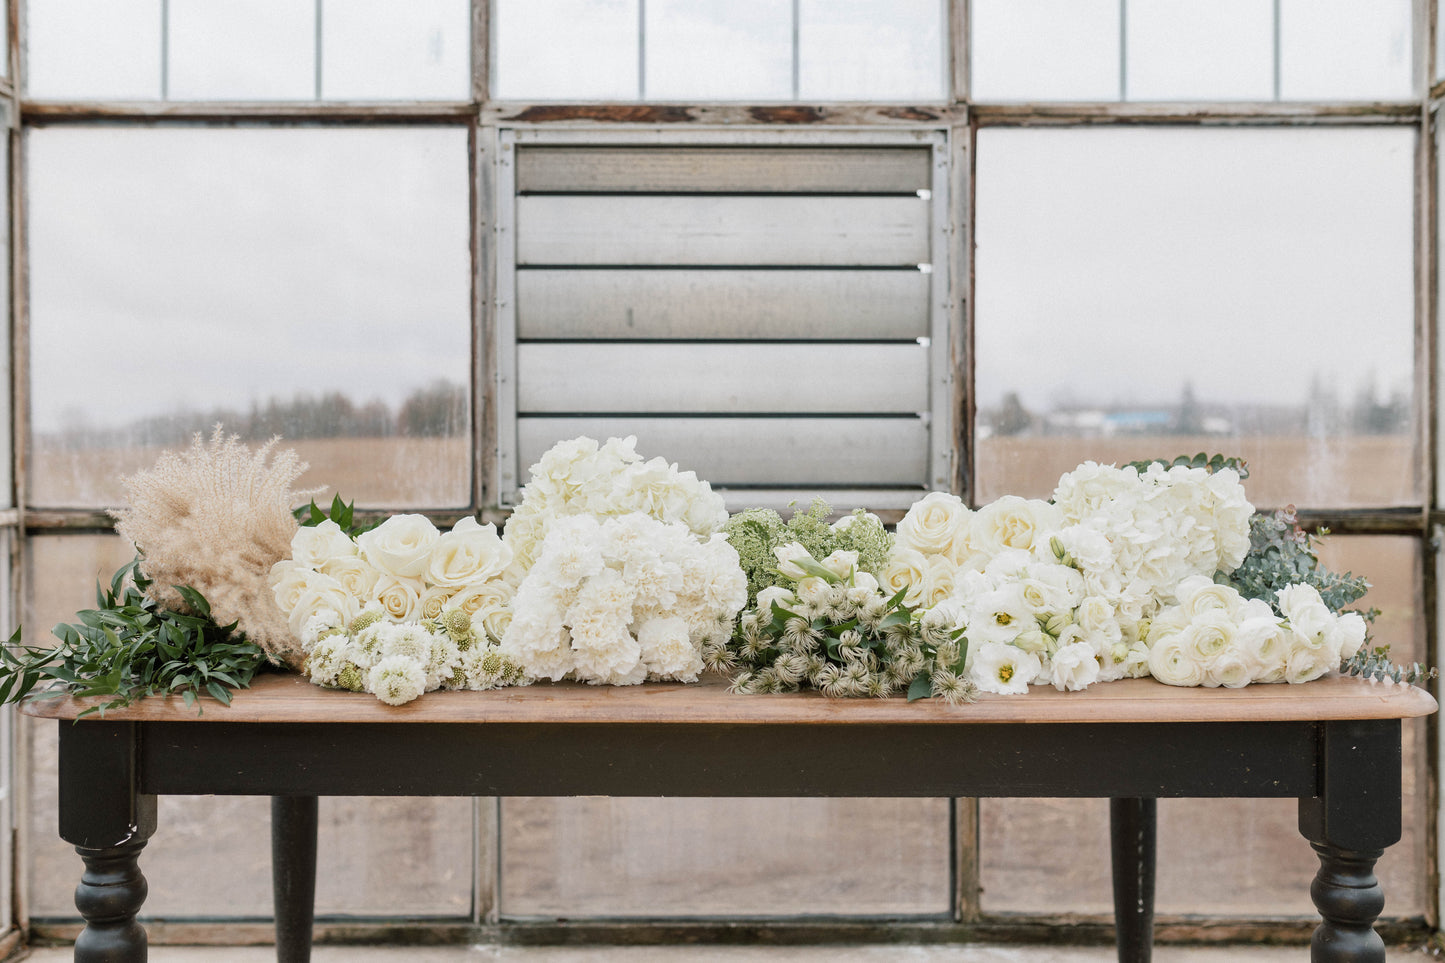 DIY Wedding Flowers